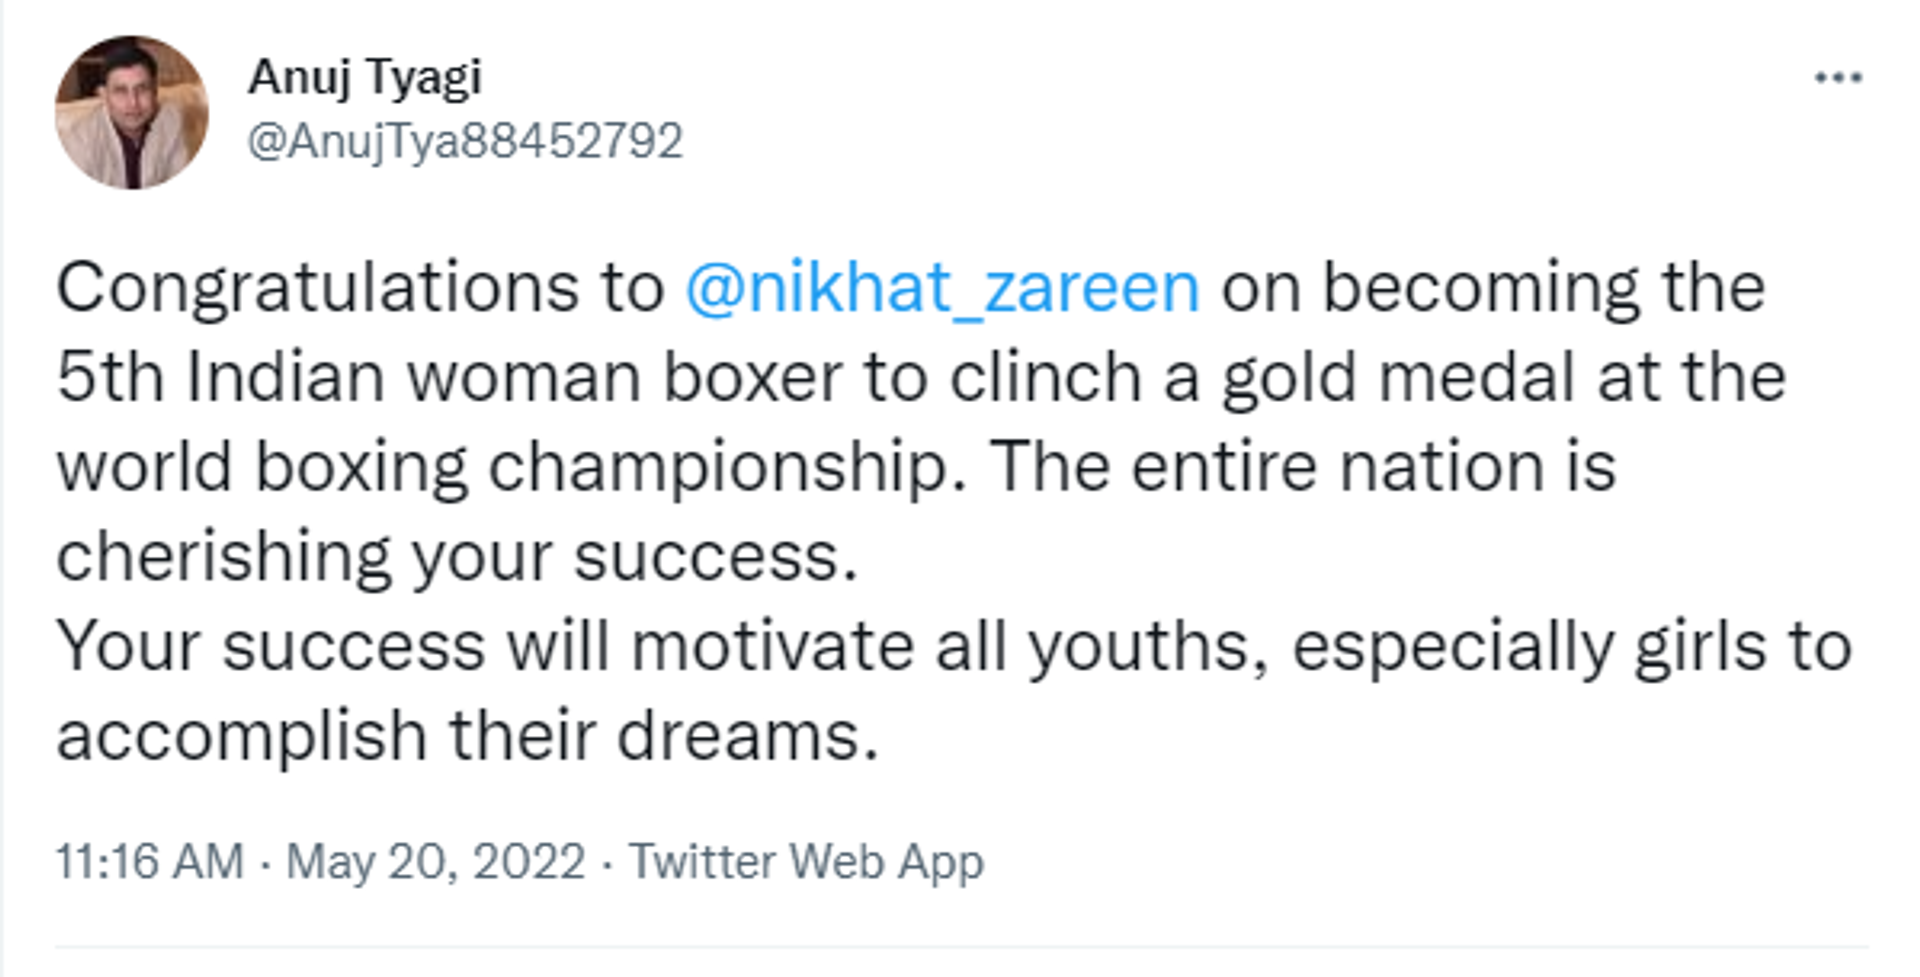 Social Media User Says Nikhat Zareen's Victory Will Inspire Girls to Accomplish Their Dreams - Sputnik International, 1920, 20.05.2022